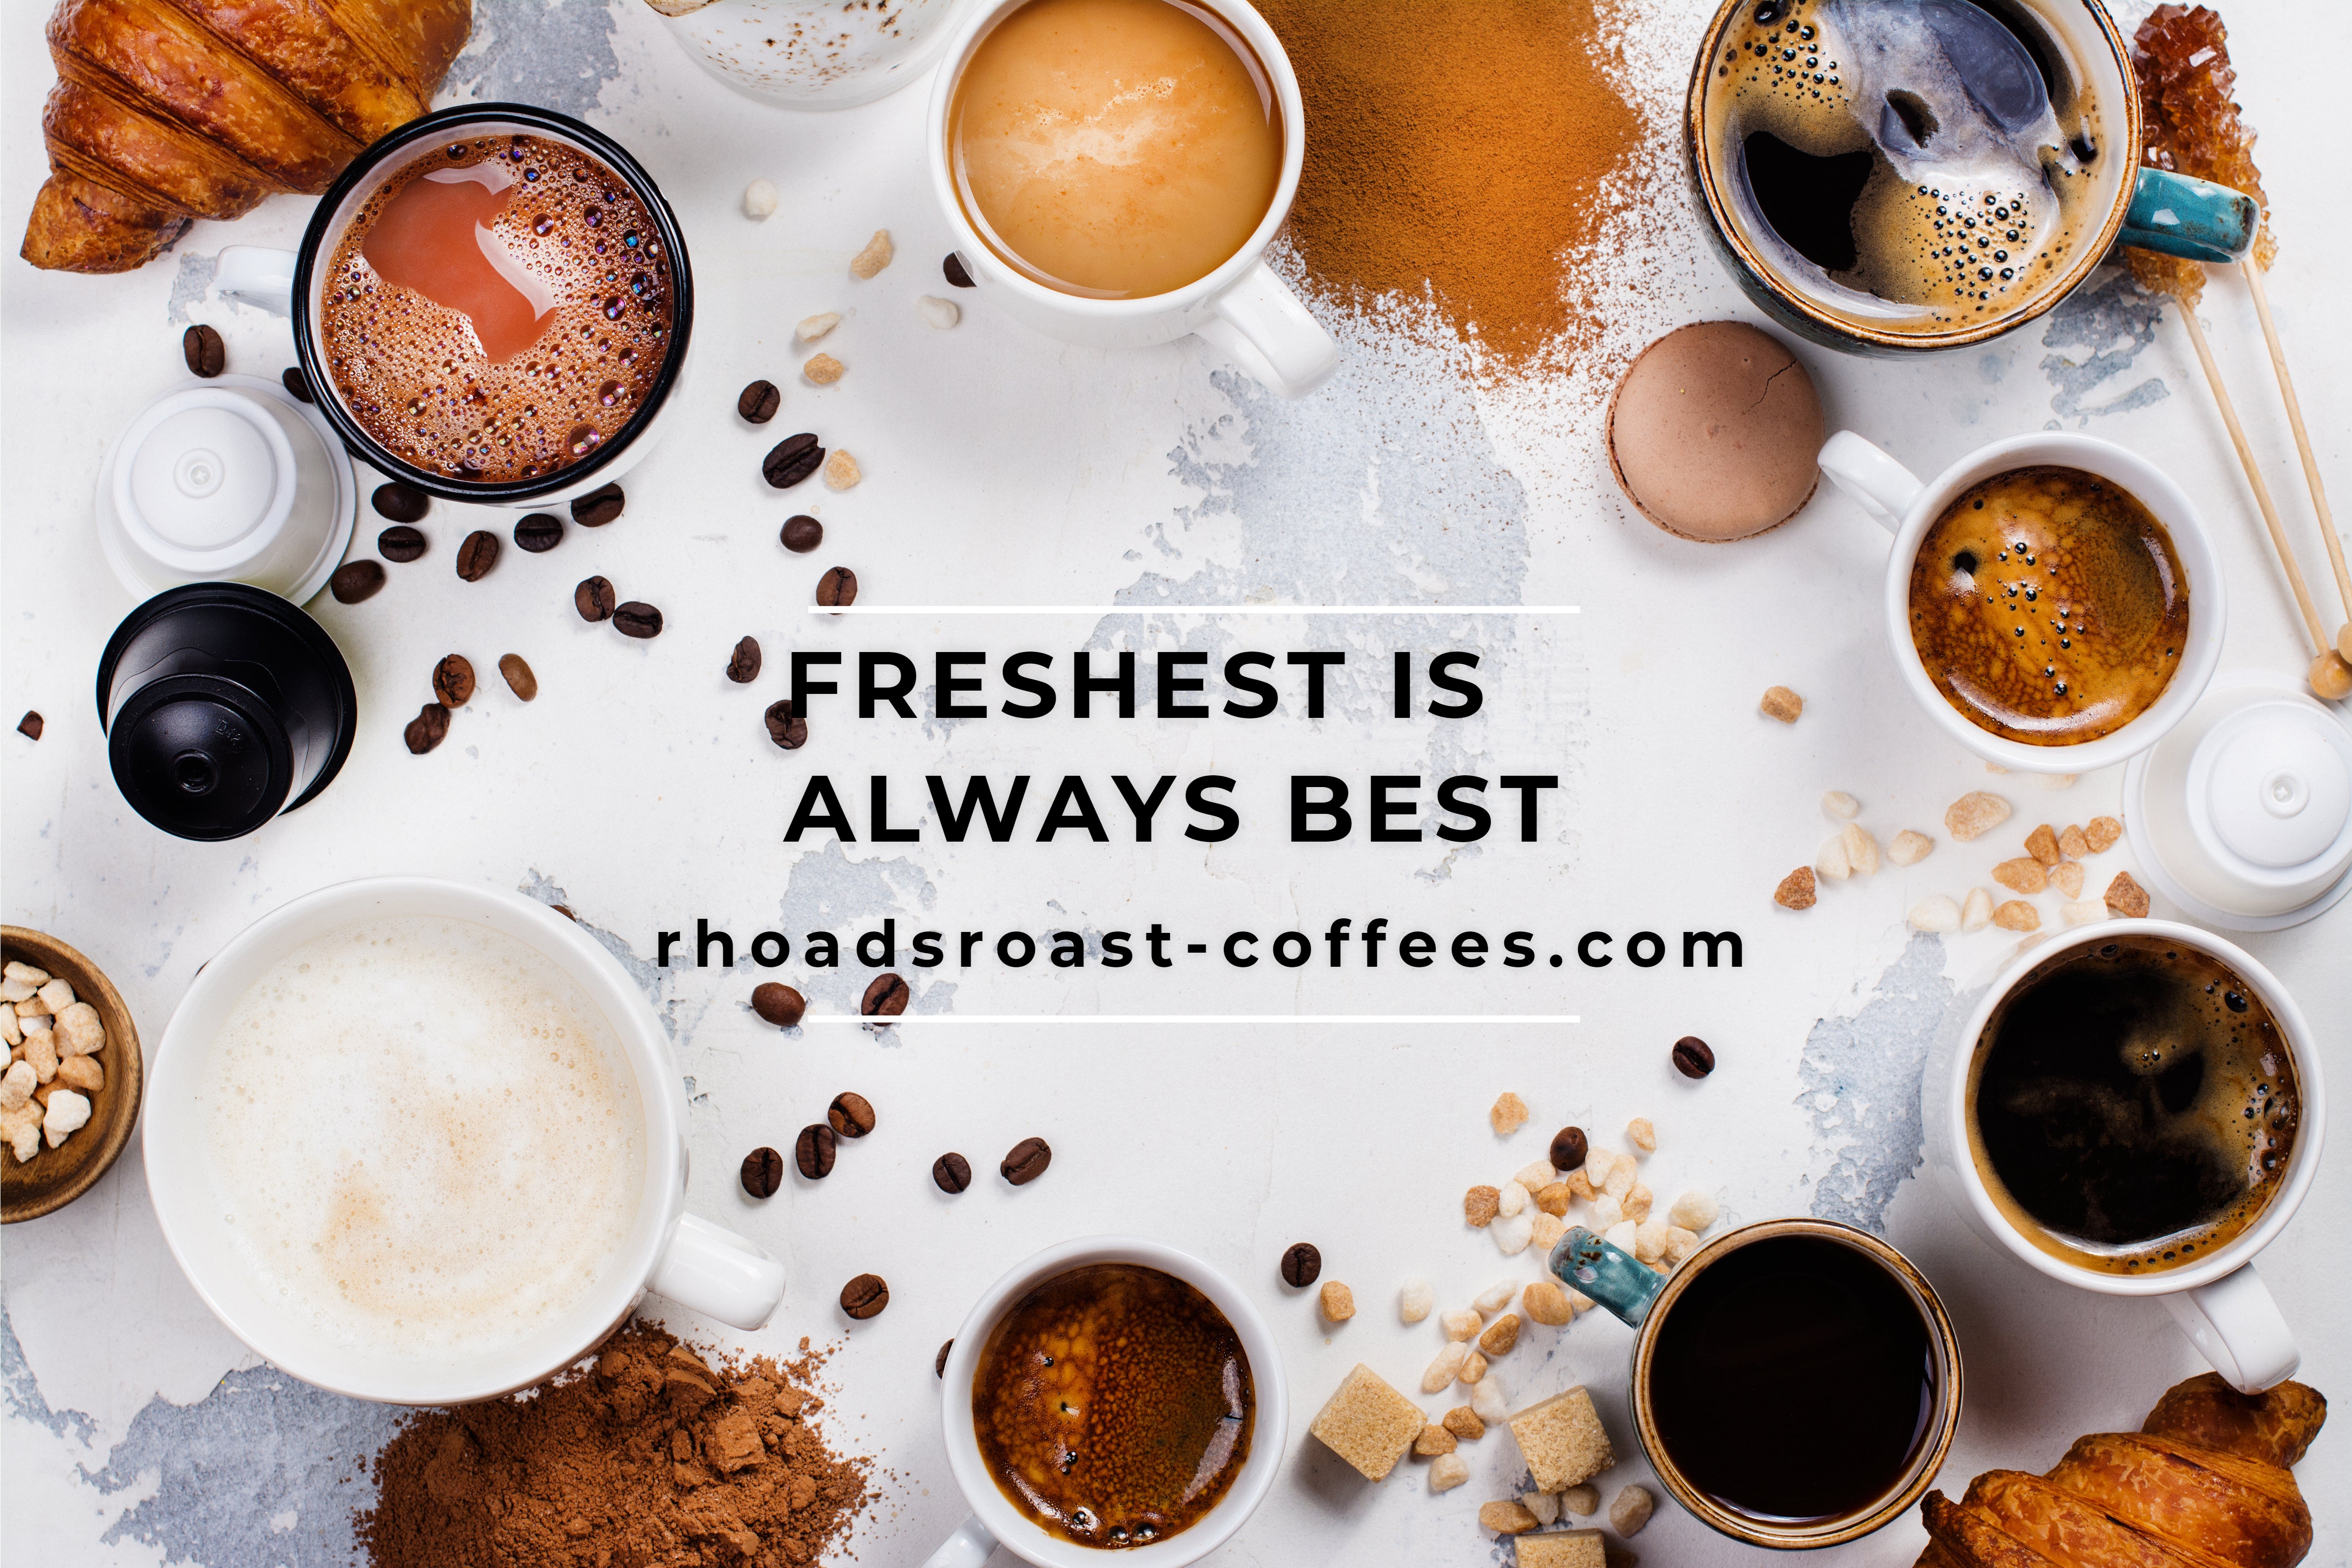 rhoadsroast-coffees.com